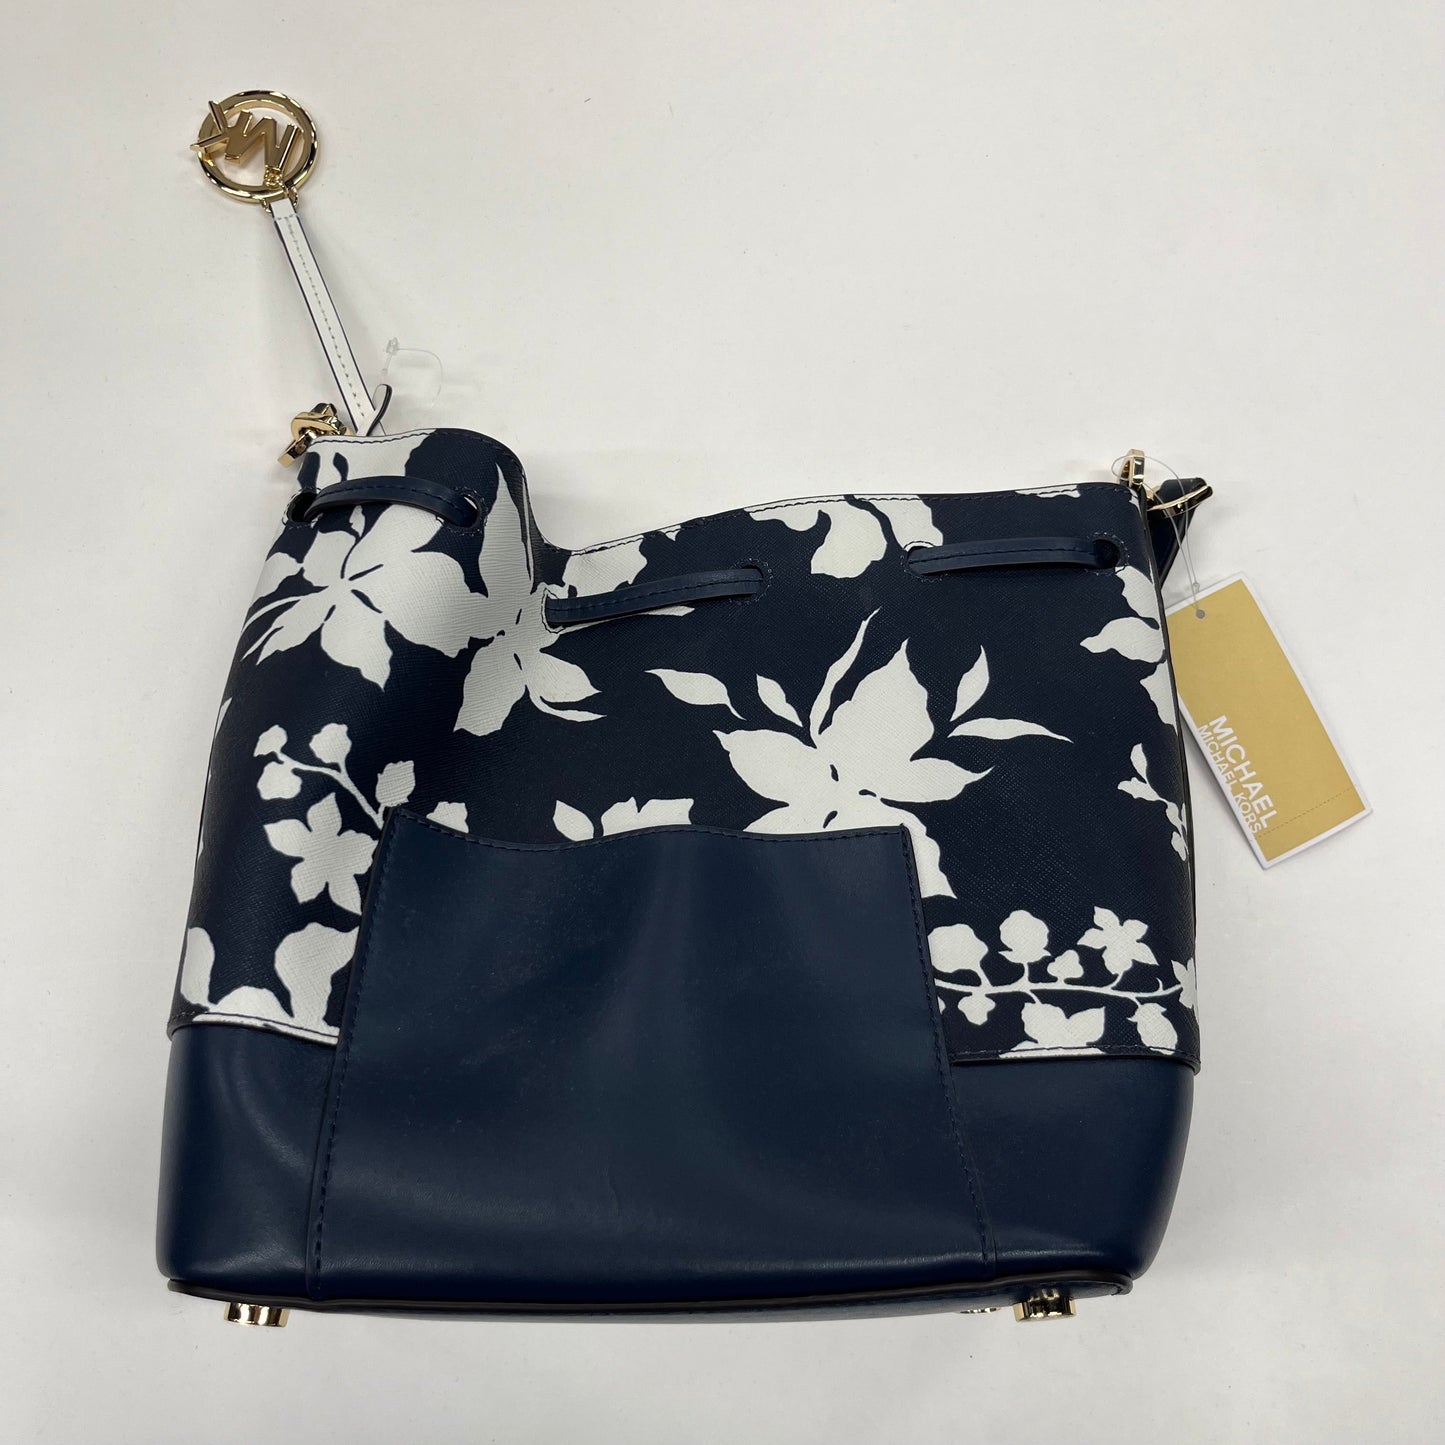 Handbag Designer Michael Kors NWT, Size Medium